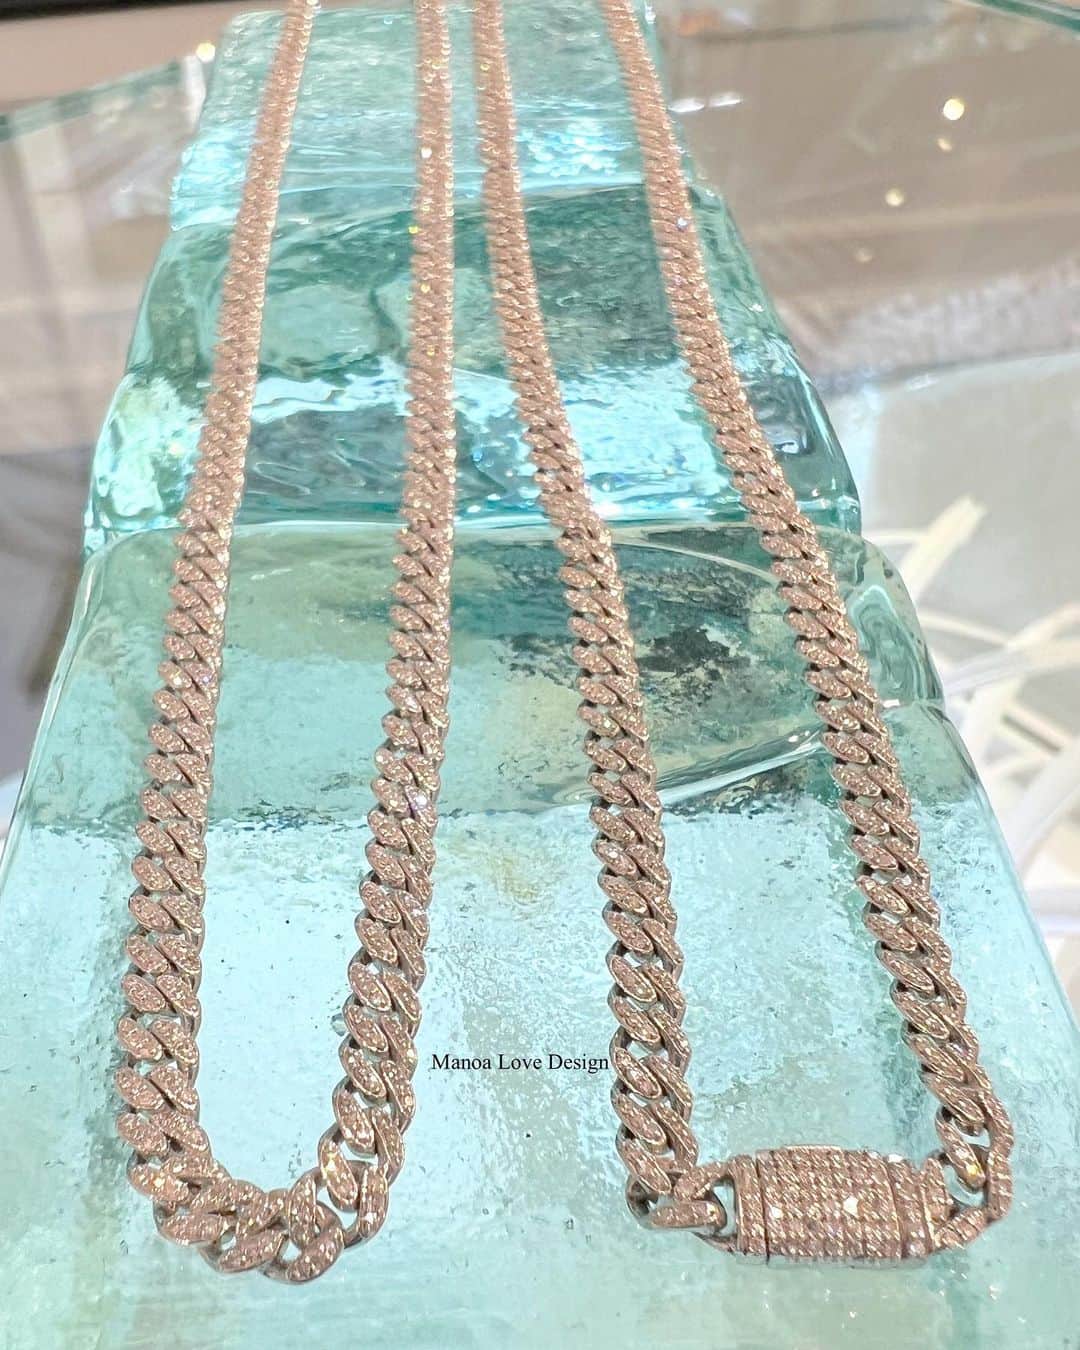 Manoa Love Design Hawaiiのインスタグラム：「Diamond White gold Cuban necklace* #manoalovedesign #waikiki#waikikibeach #jewelryshopping #jewelryaddict #jewelryfashion #hawaiivacation #hawaiitrip #honoluluhawaii #oahuhawaii #internationalmarketplace#manoa#マノアラブデザイン #マ ノア#キューバンネックレス #キューバンチェーン #ワイキキ＃ハ ワイ在住#ジュエリー好き #ゴールドネックレス #ジュエリーコーディネート#夏威東」